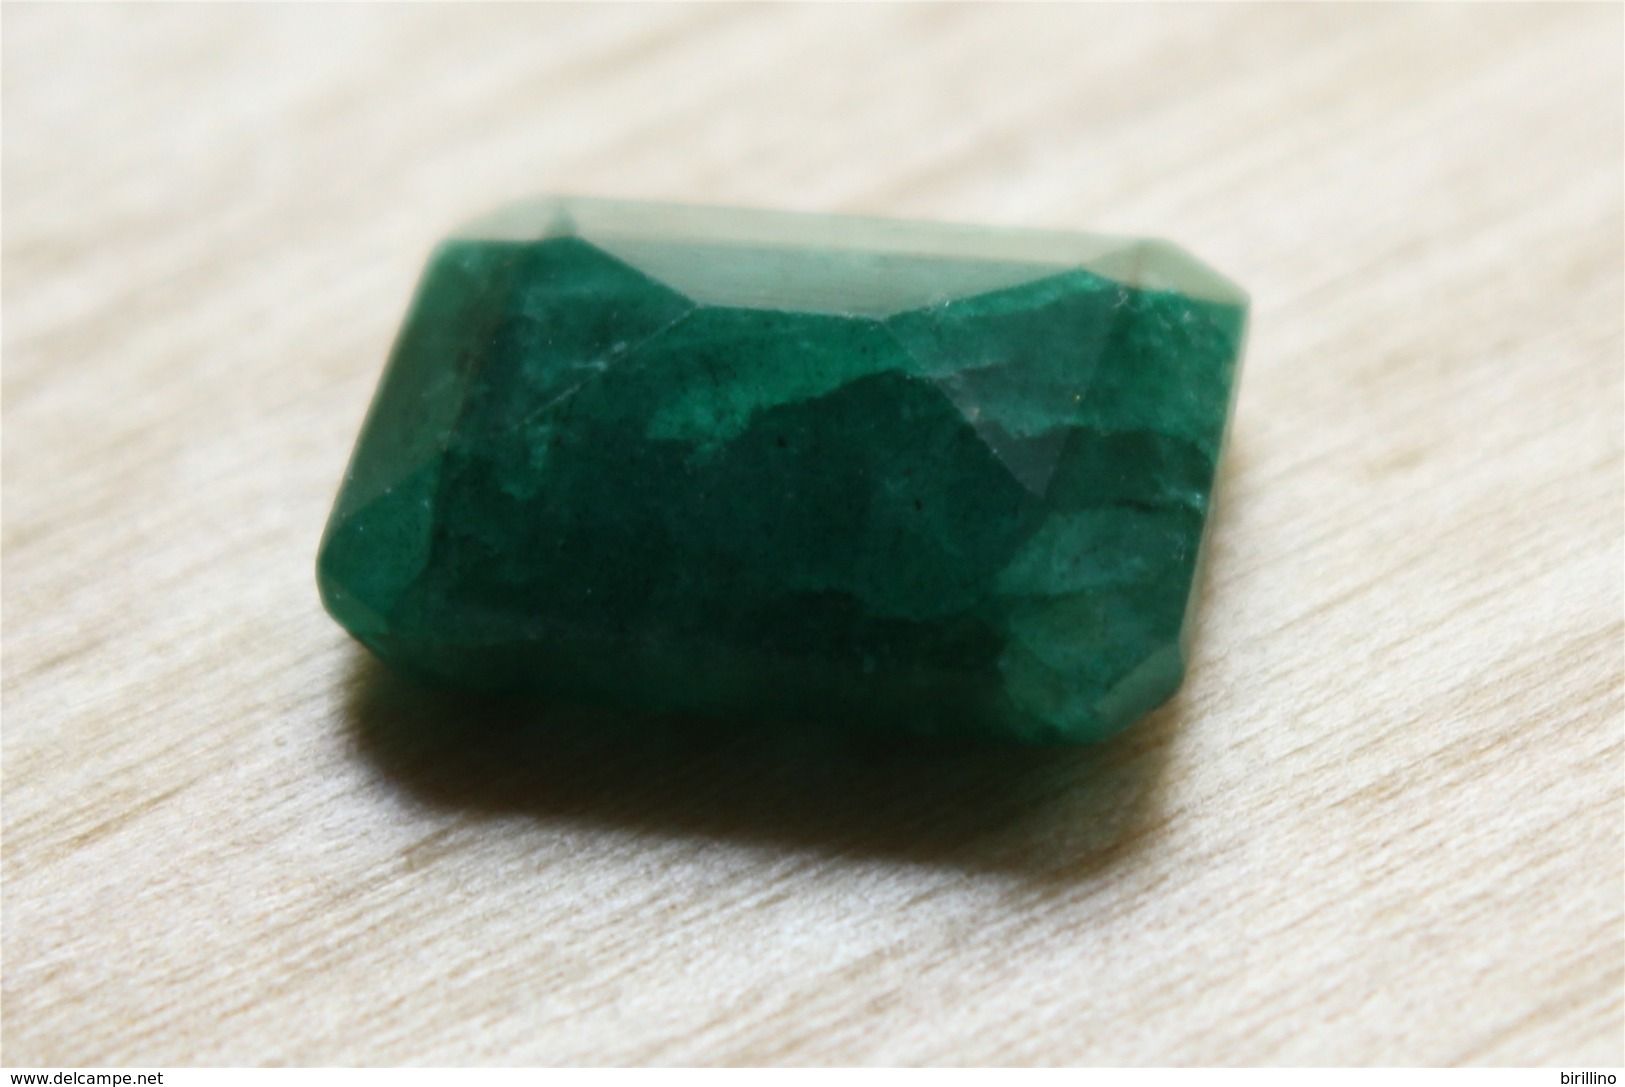 64 - Smeraldo - C.t. 7.65 - Emerald